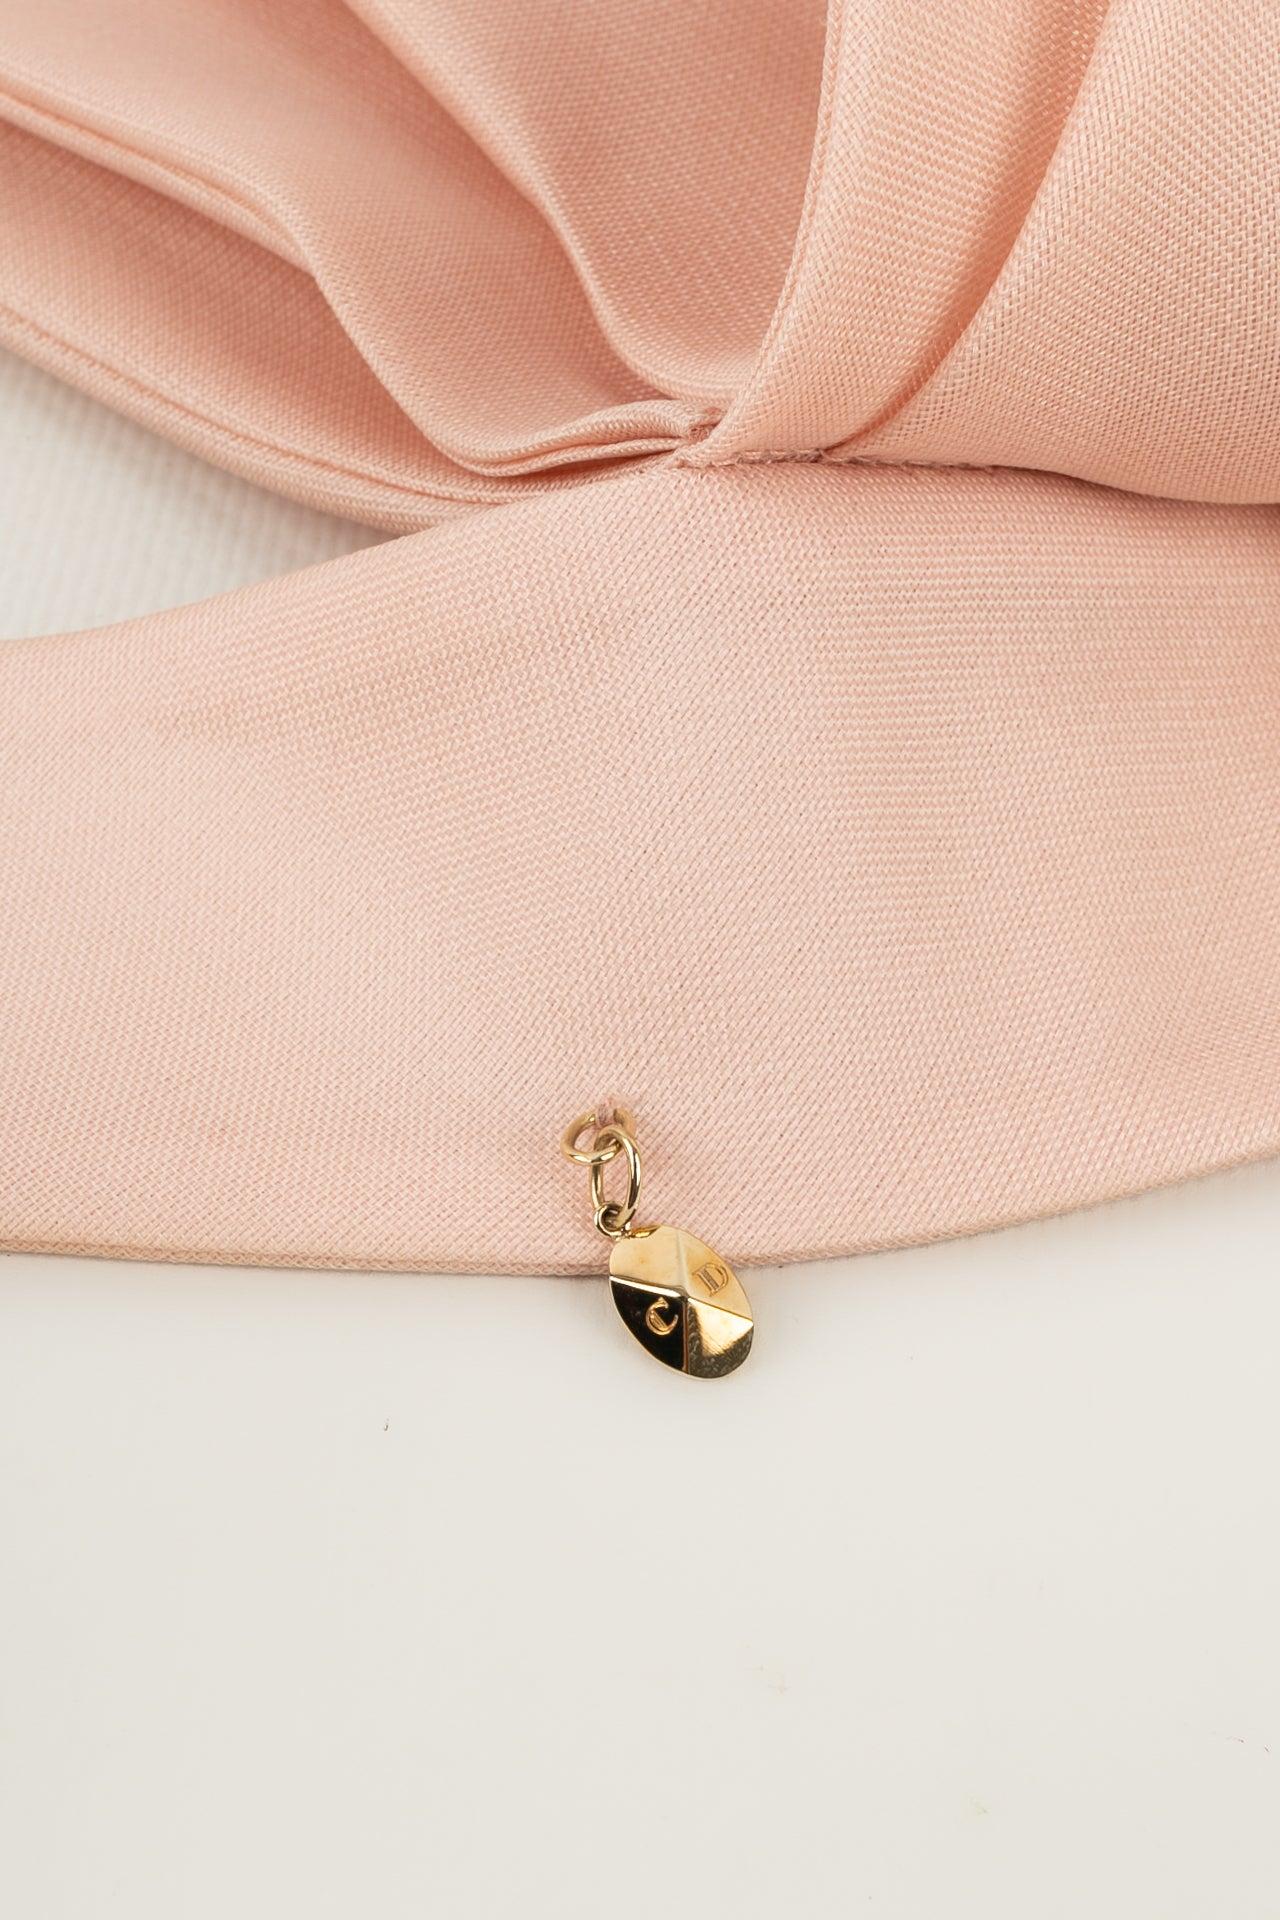 Christian Dior Ascot Tie in Silk  In Excellent Condition For Sale In SAINT-OUEN-SUR-SEINE, FR